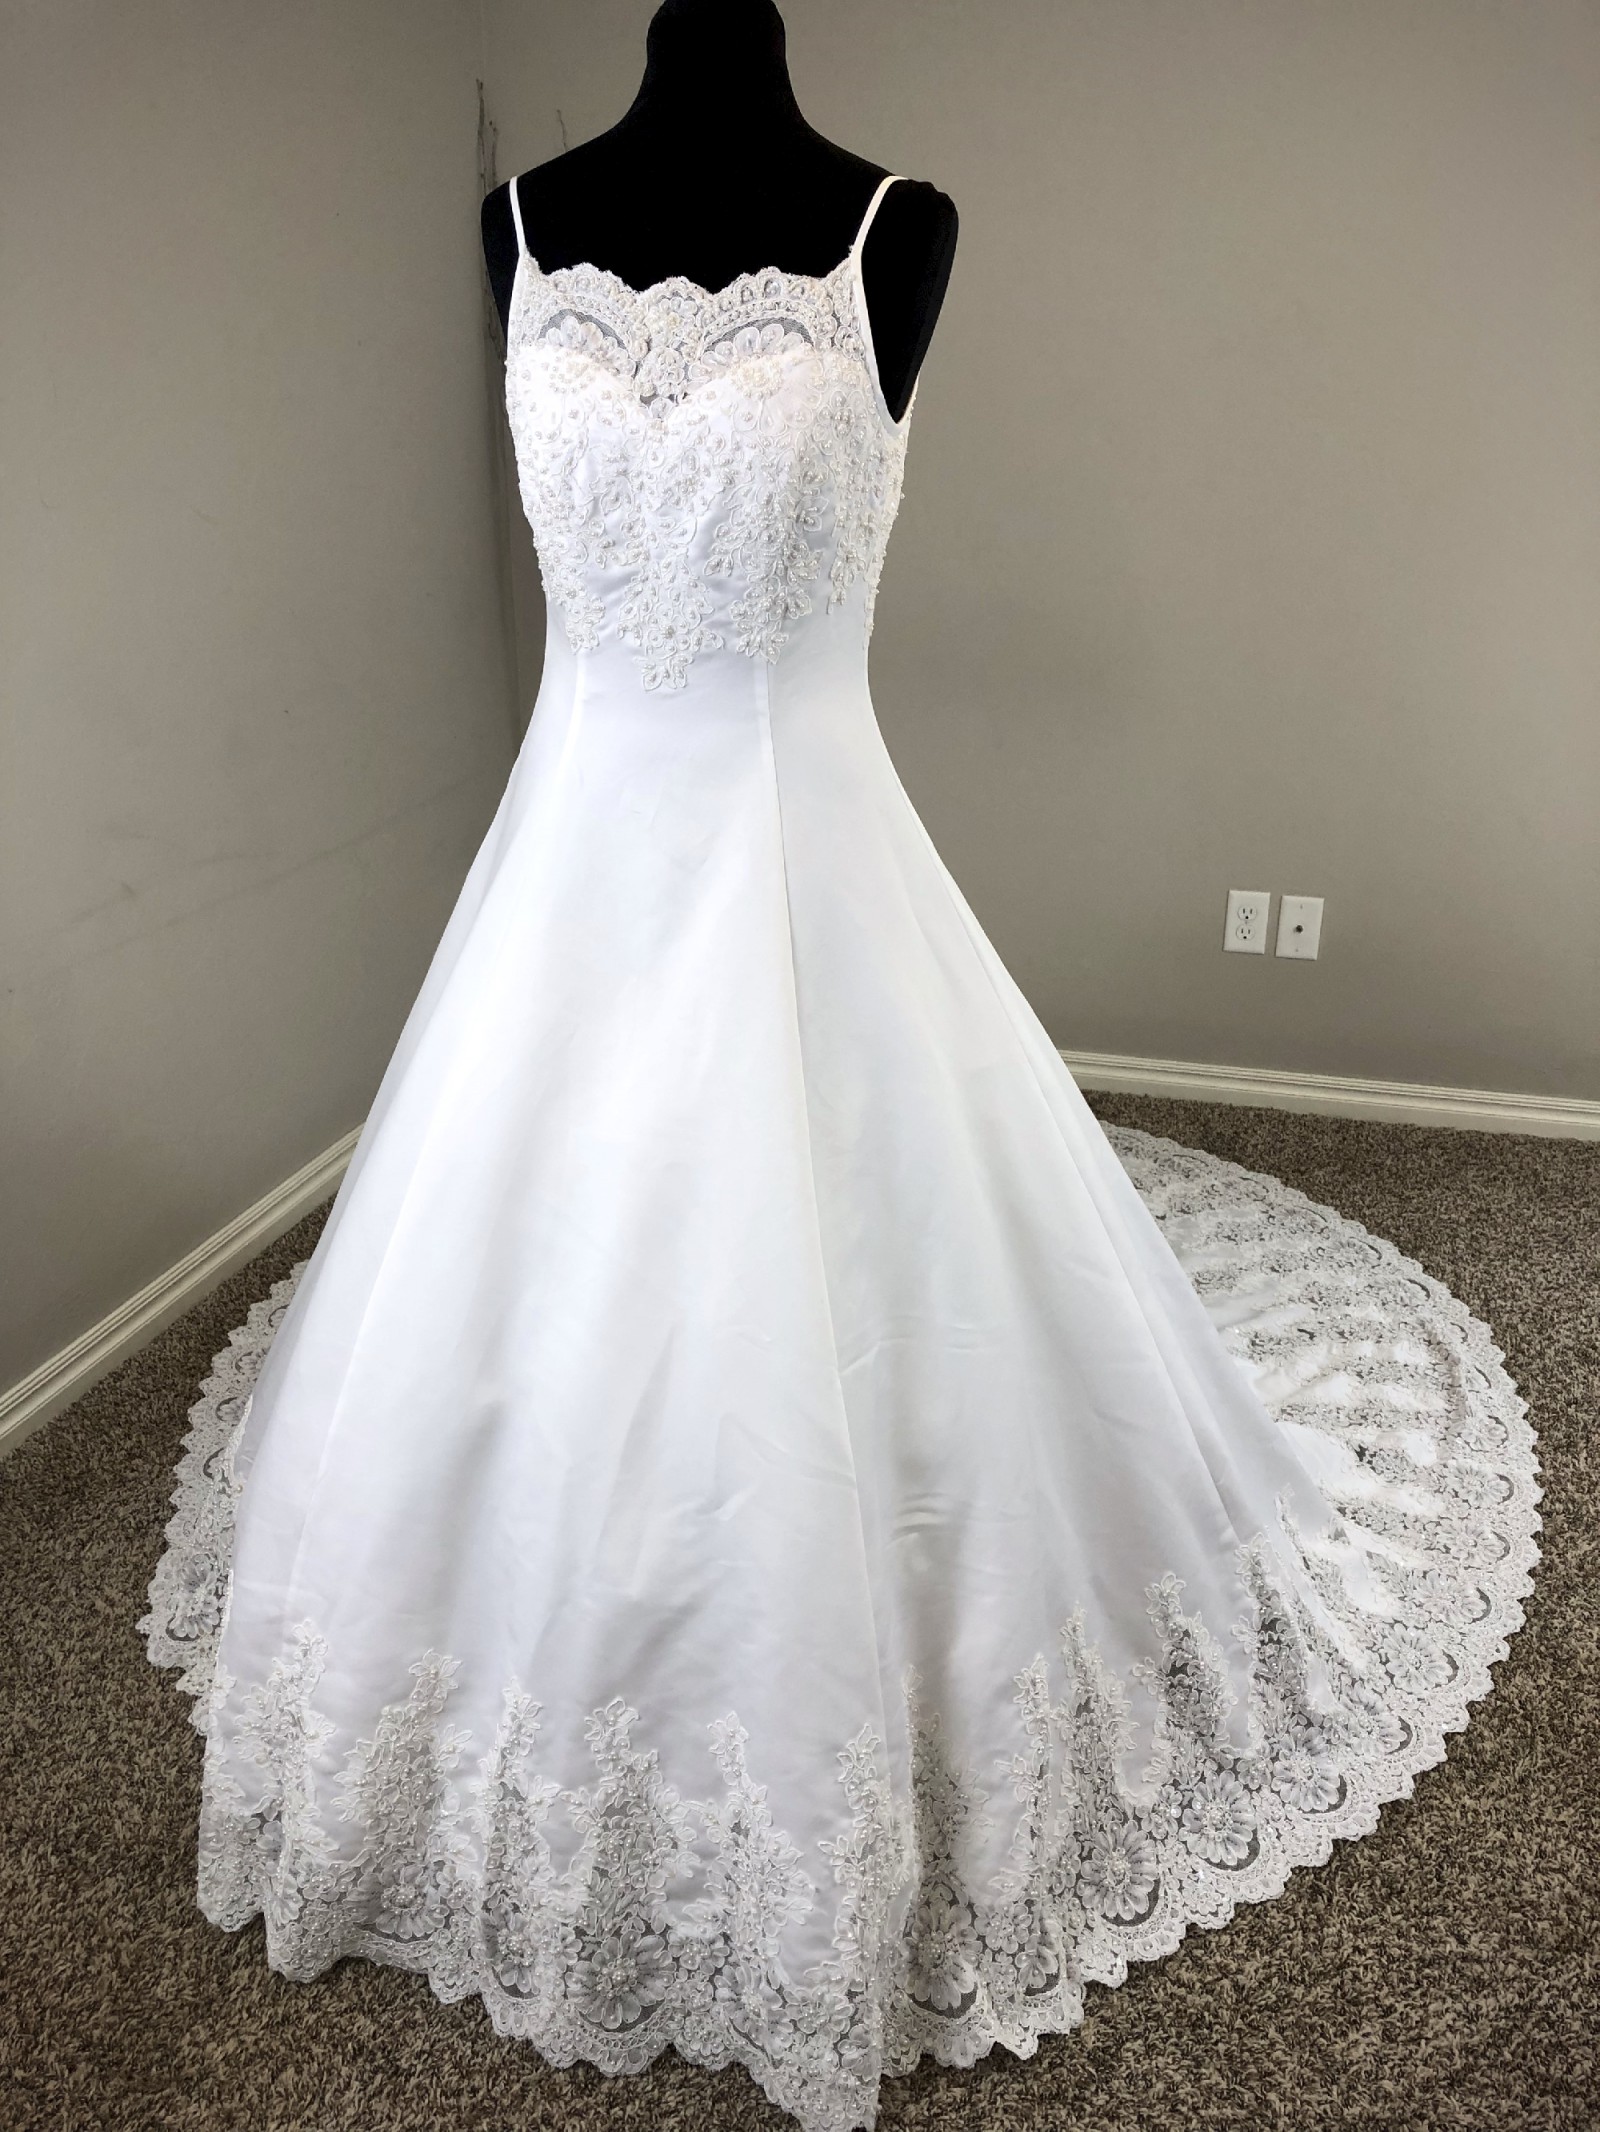 The Signature Collection New Wedding Dress Save 83% - Stillwhite